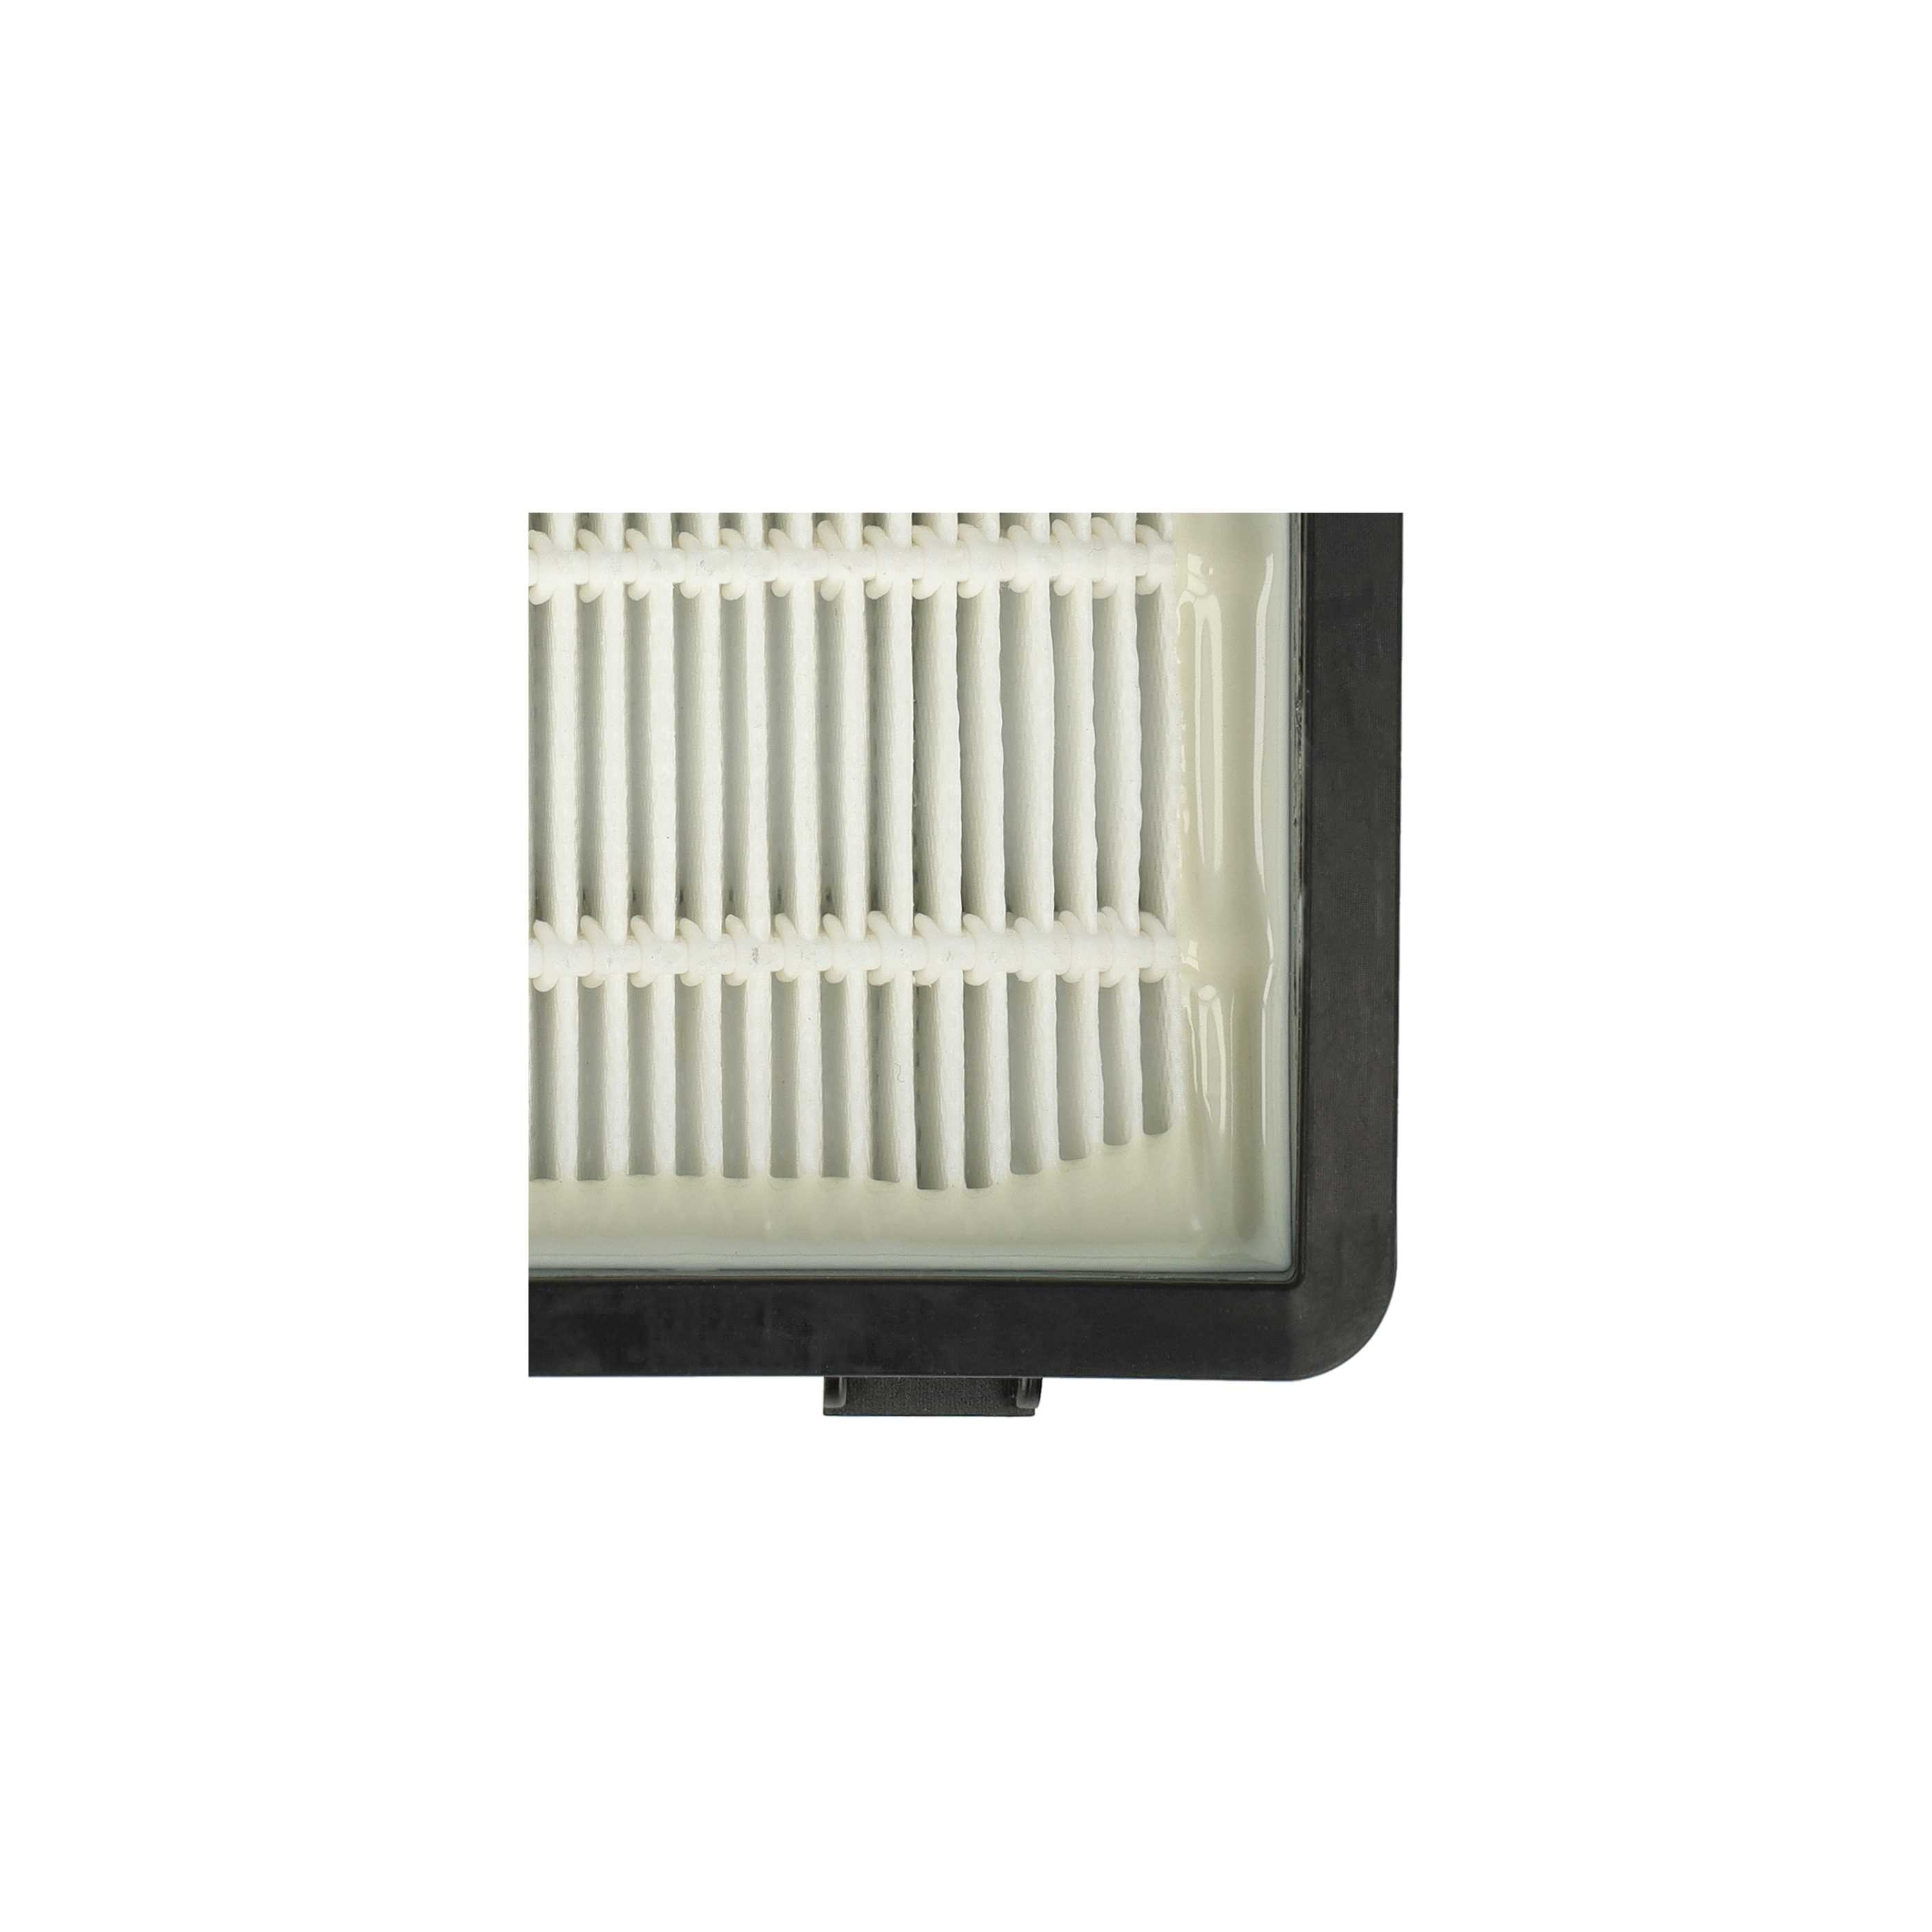 3x Filtr do odkurzacza Bosch zamiennik Bosch 17001740 - filtr HEPA